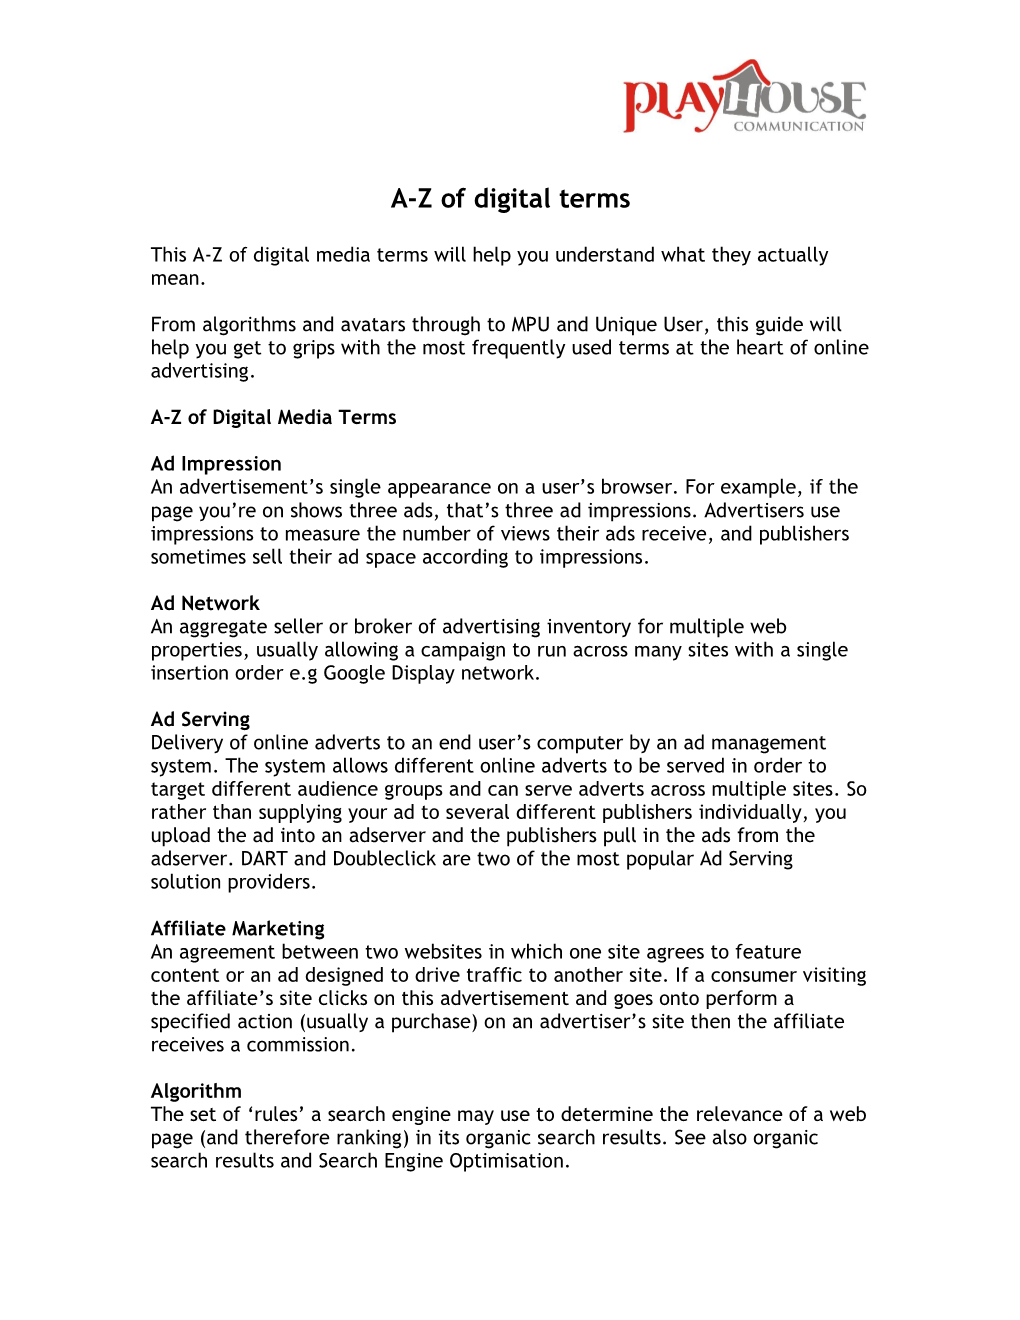 AZ of Digital Terms